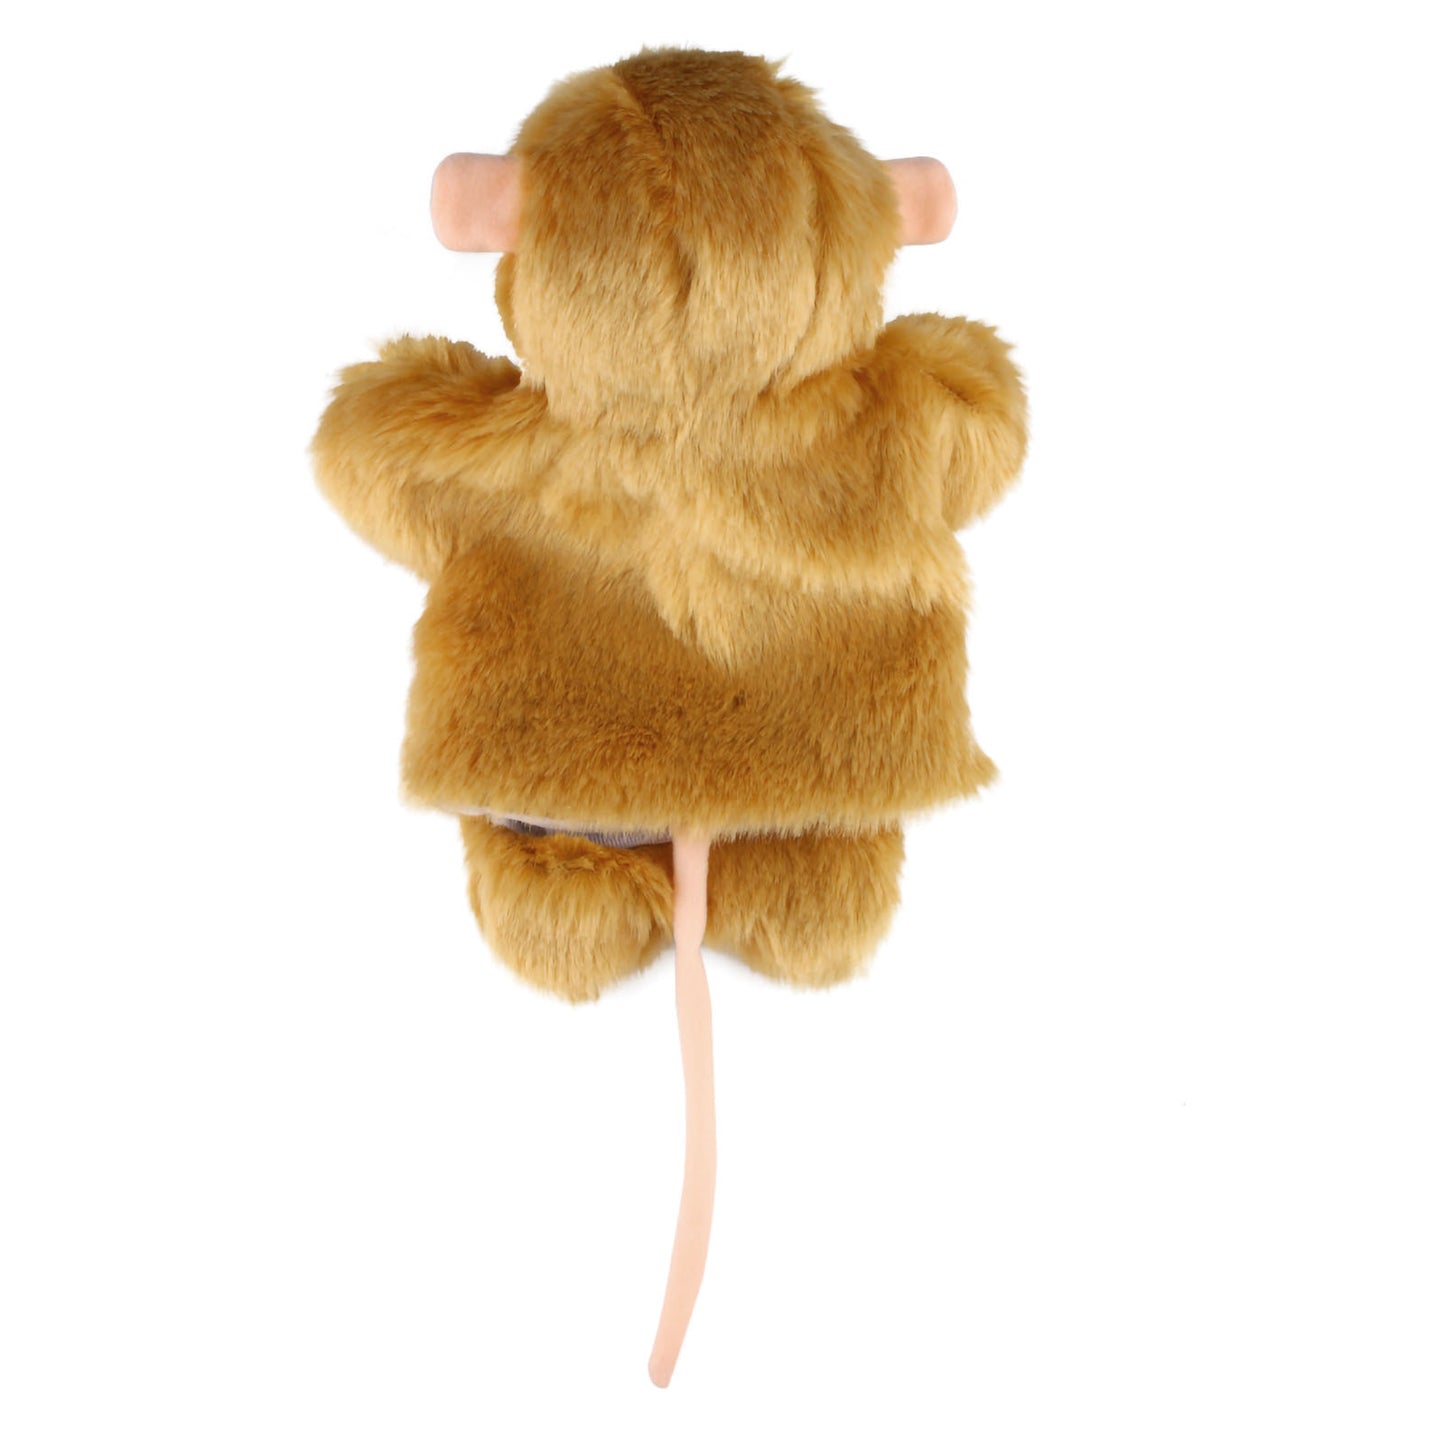 Andux Hand Puppet Soft Stuffed Animal Toy (SO-32 Monkey)